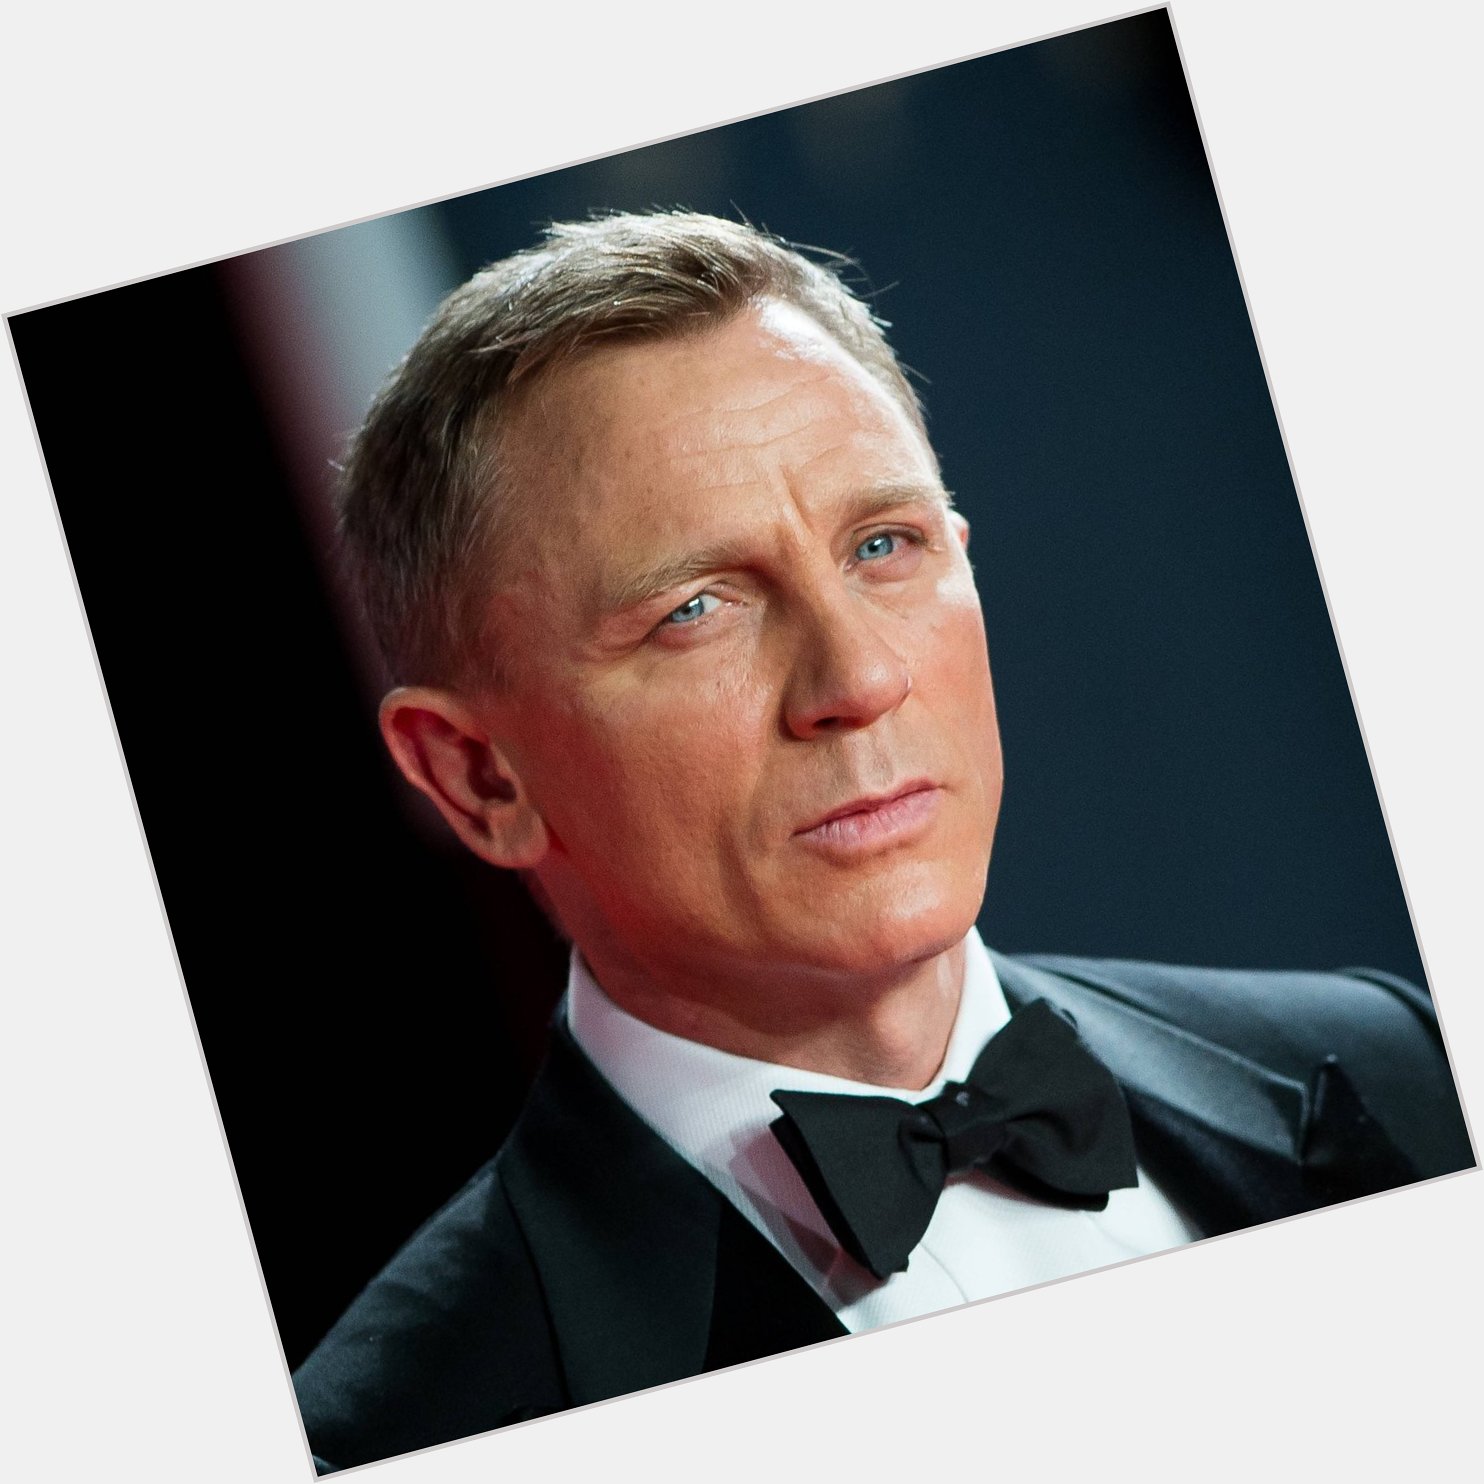 Happy 55th birthday to the talented Daniel Craig! 